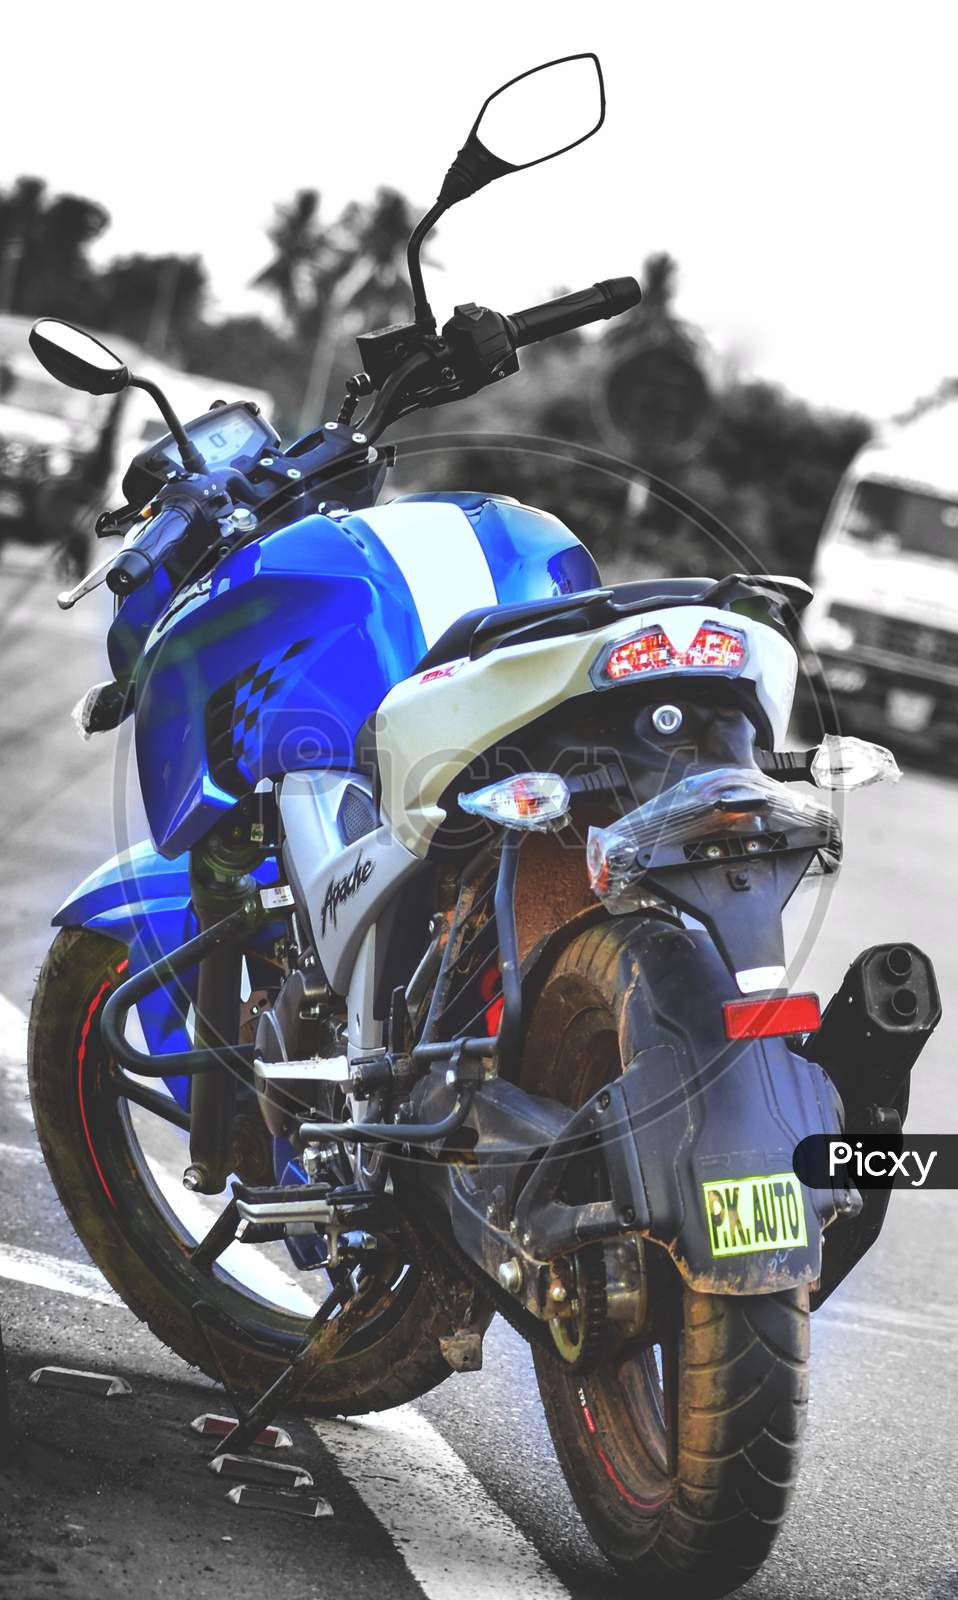 Image Of Tvs Apache Rtr 160 4v The Blue Variant Bike Ml Picxy